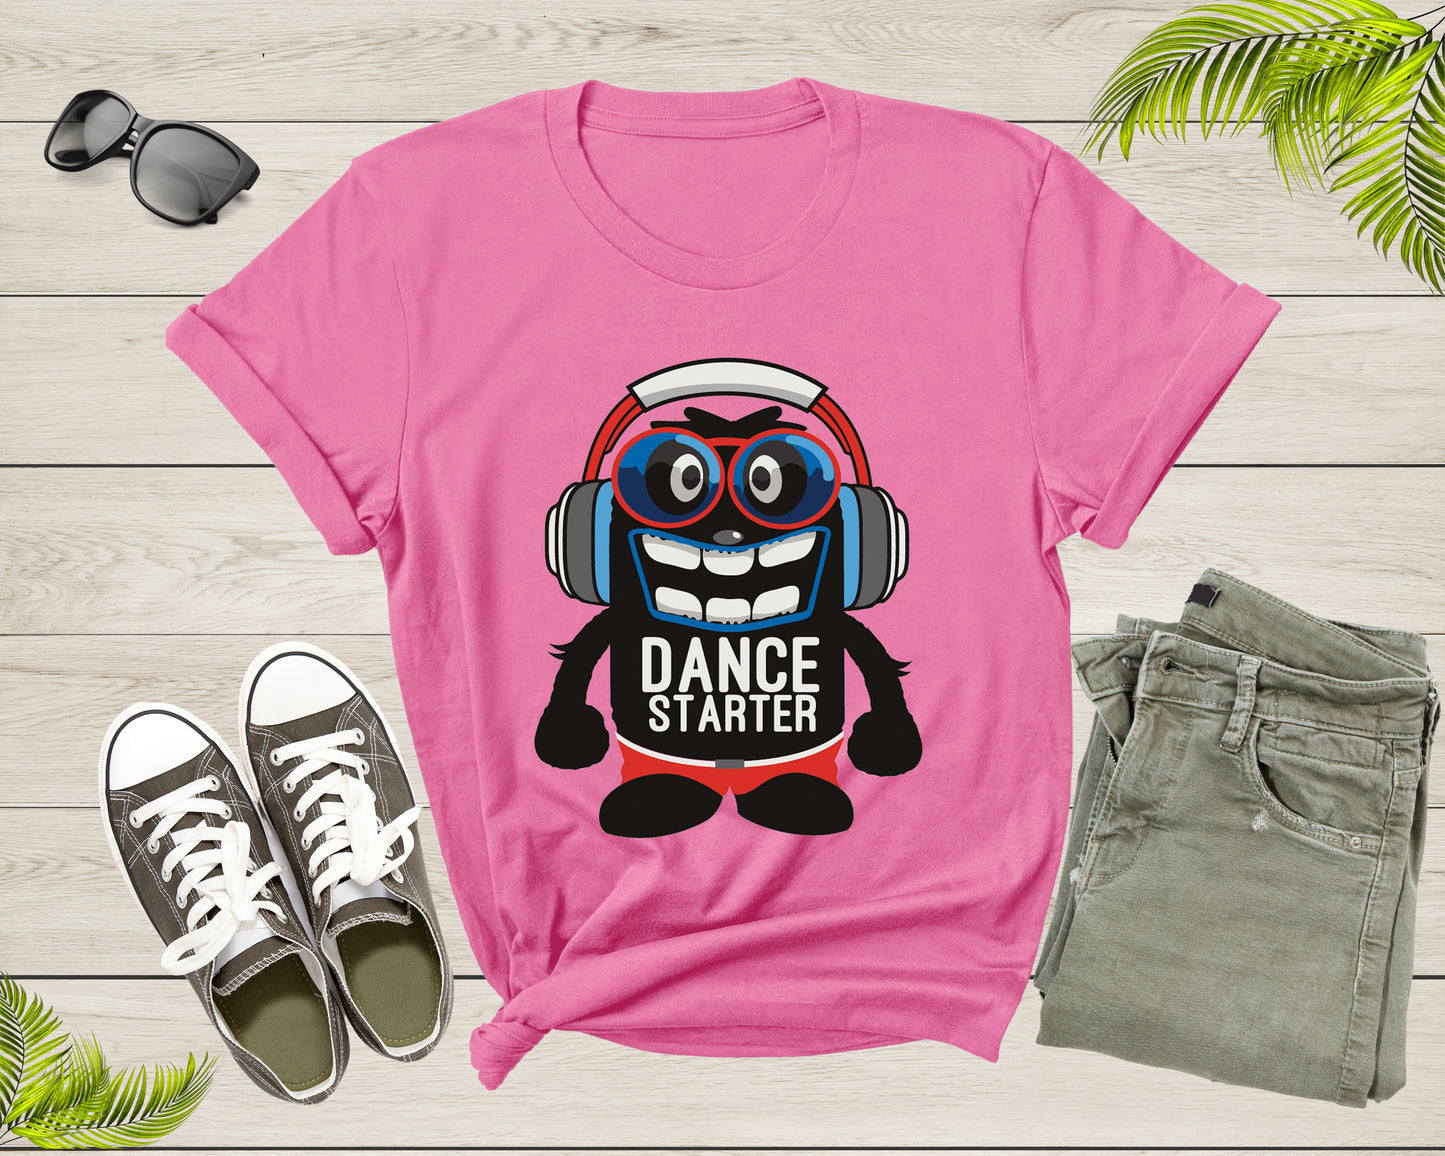 Dance Starter Funny Smiling Mascot with Glasses and Headset T-Shirt Dancer Dance Lover Gift Graphic T Shirt for Men Women Kids Boys Girls